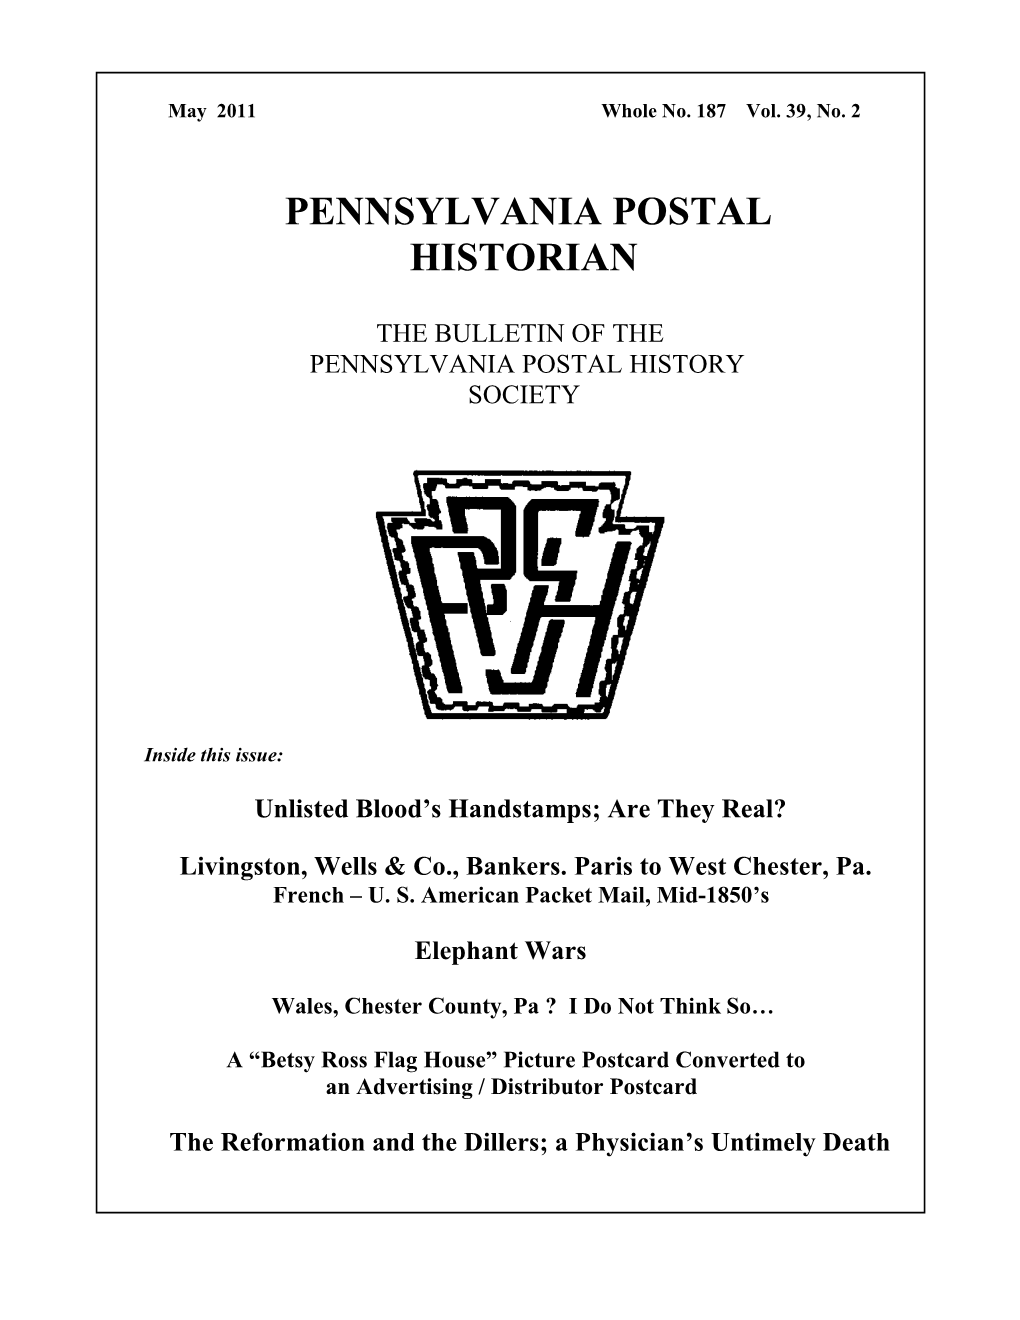 Pennsylvania Postal Historian